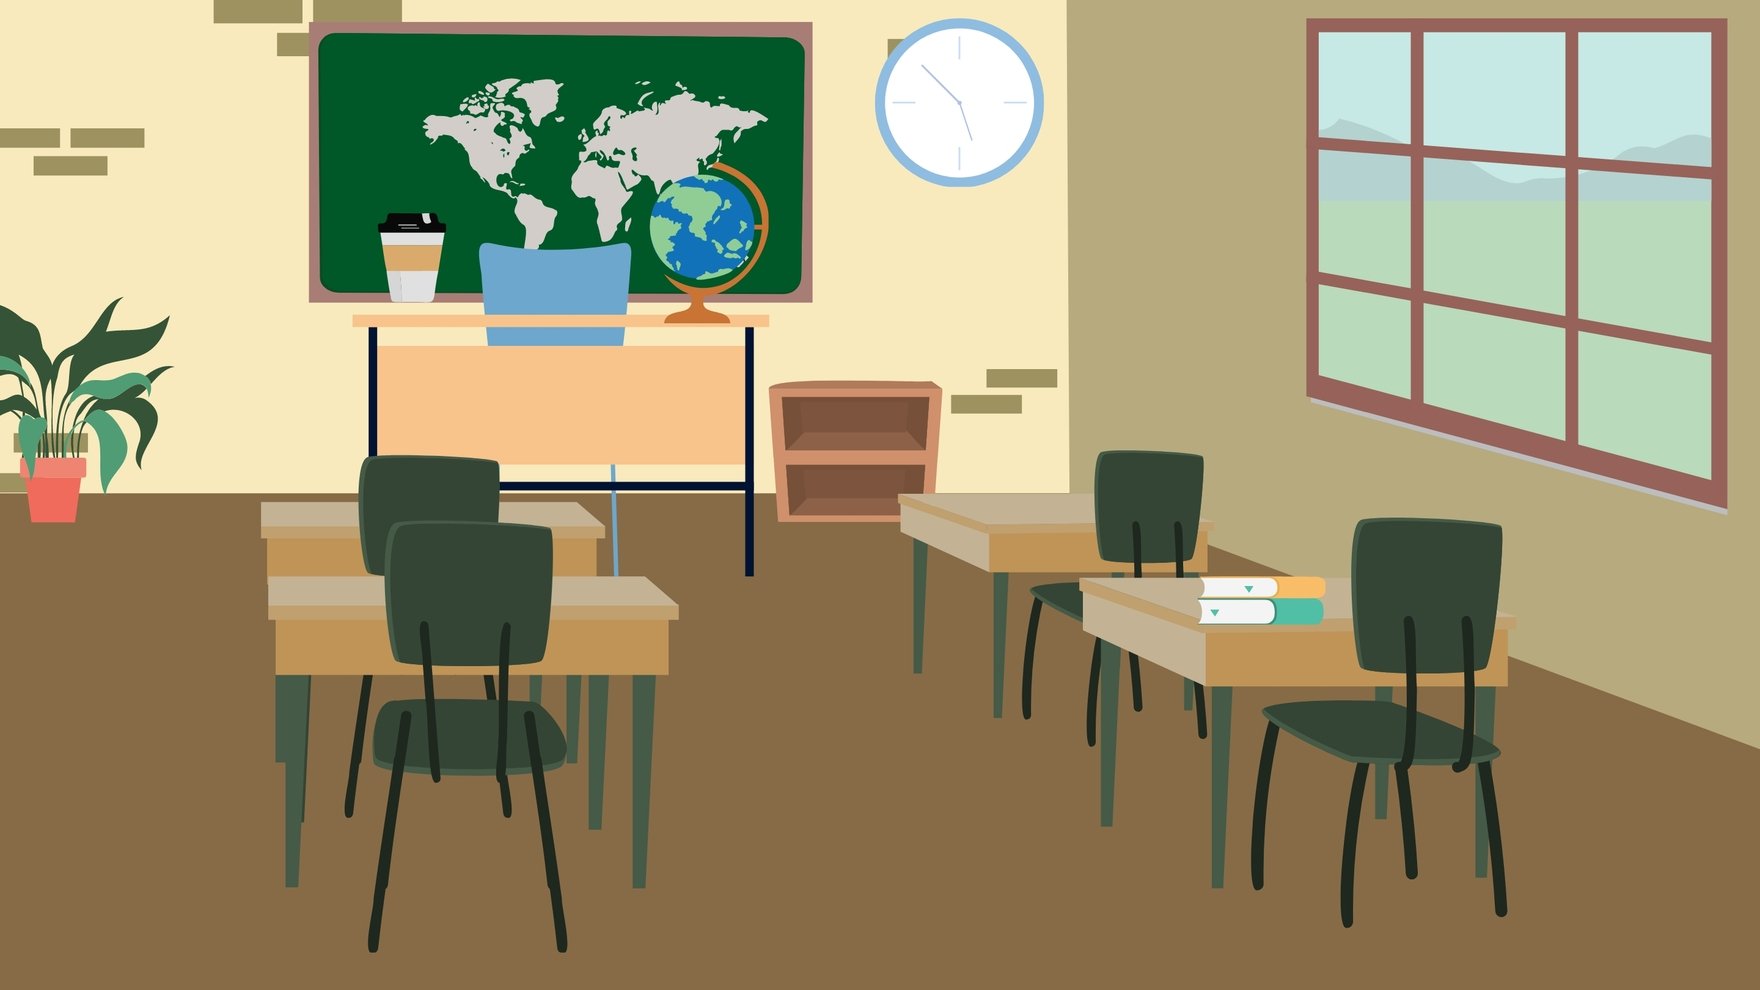 3d Classroom Background in Illustrator, EPS, SVG, JPG, PNG